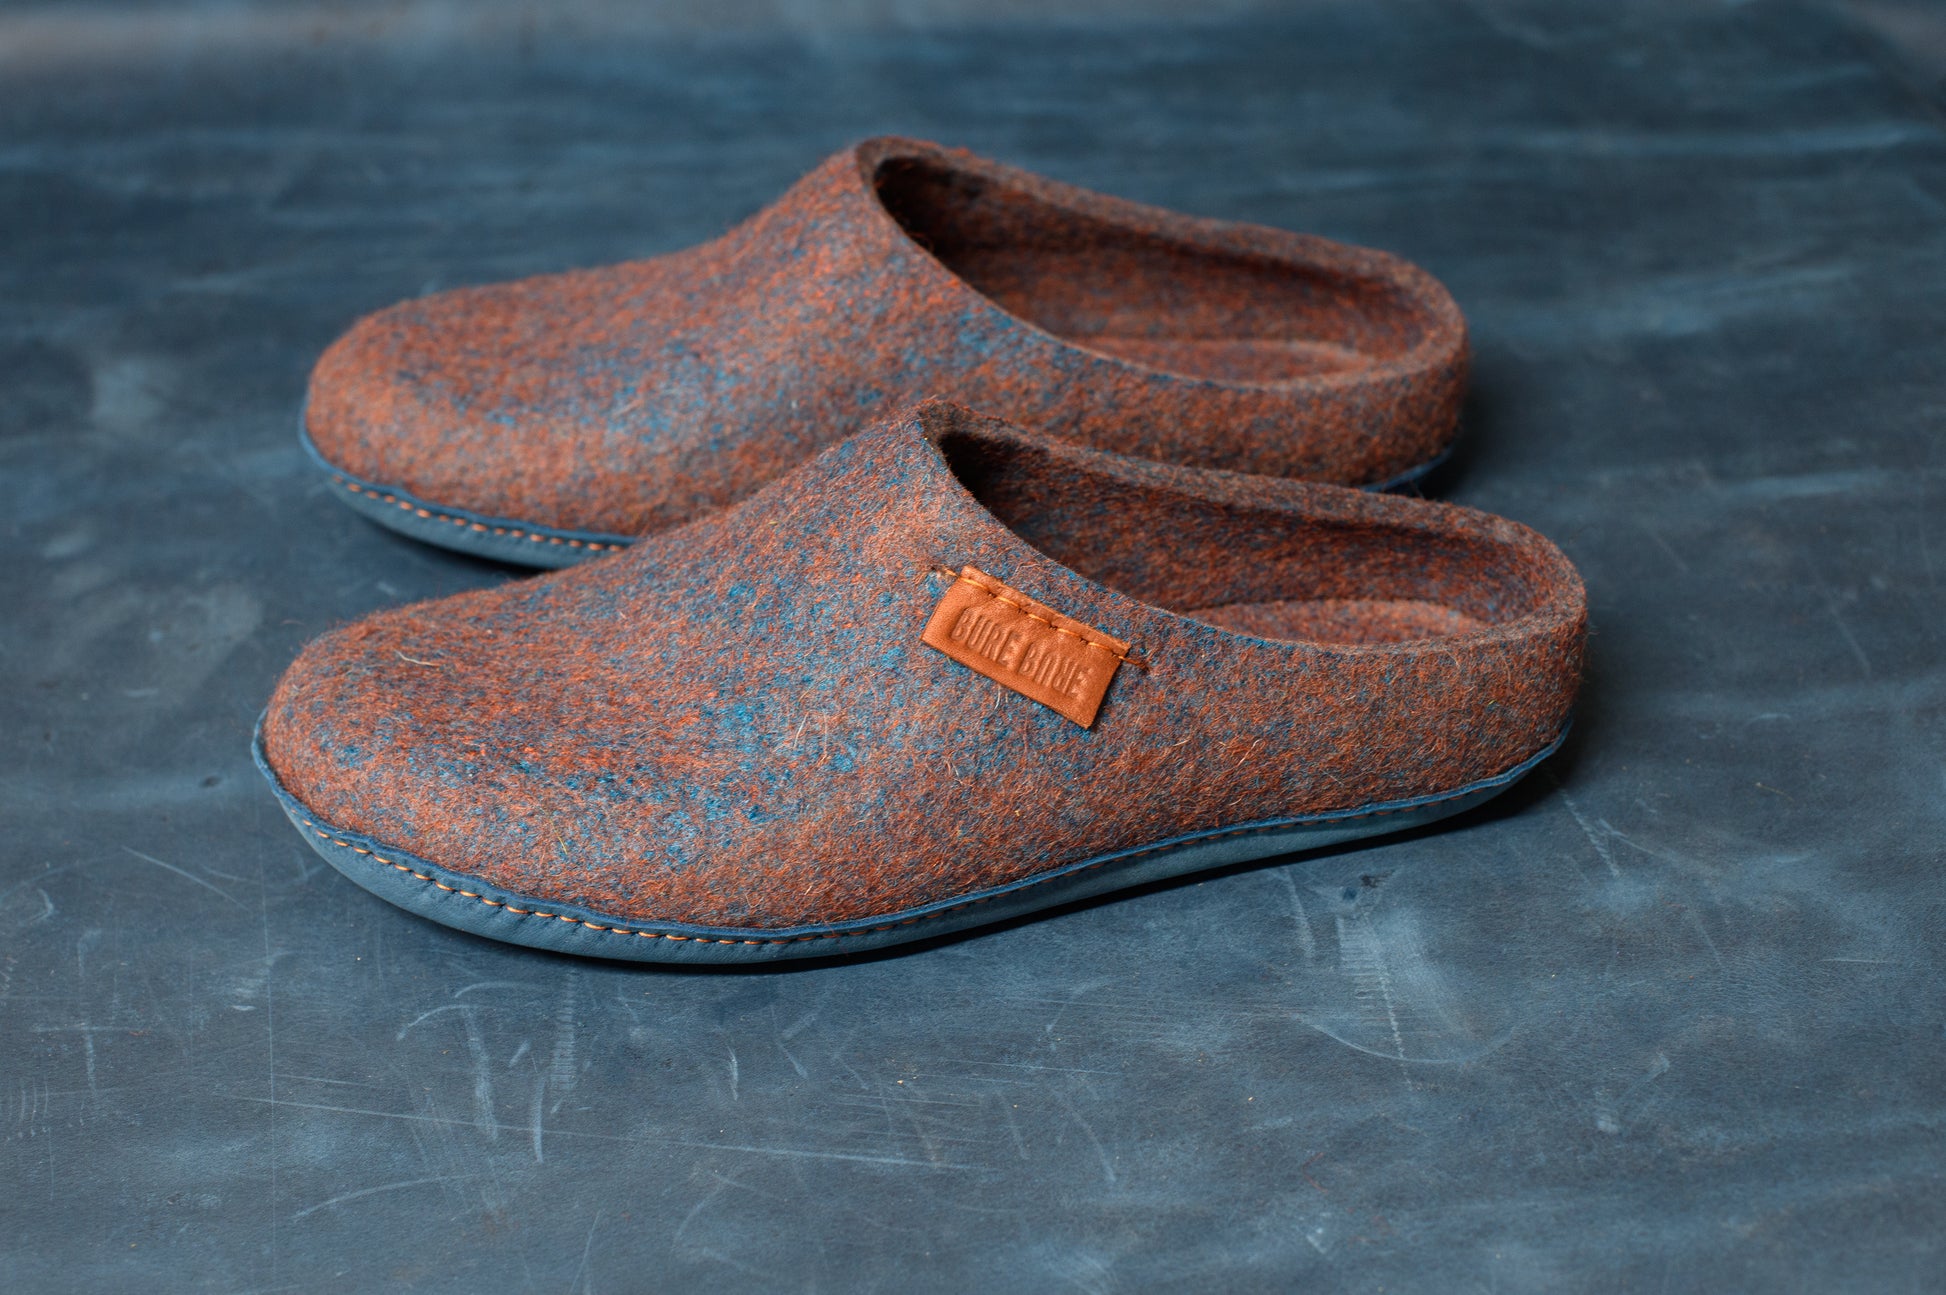 [felted_slippers],[wool_slippers], [burebure_slippers], [warm_wool_slippers], Semi-enclosed heel men's slippers - Rusted Metal, BureBure shoes and slippers